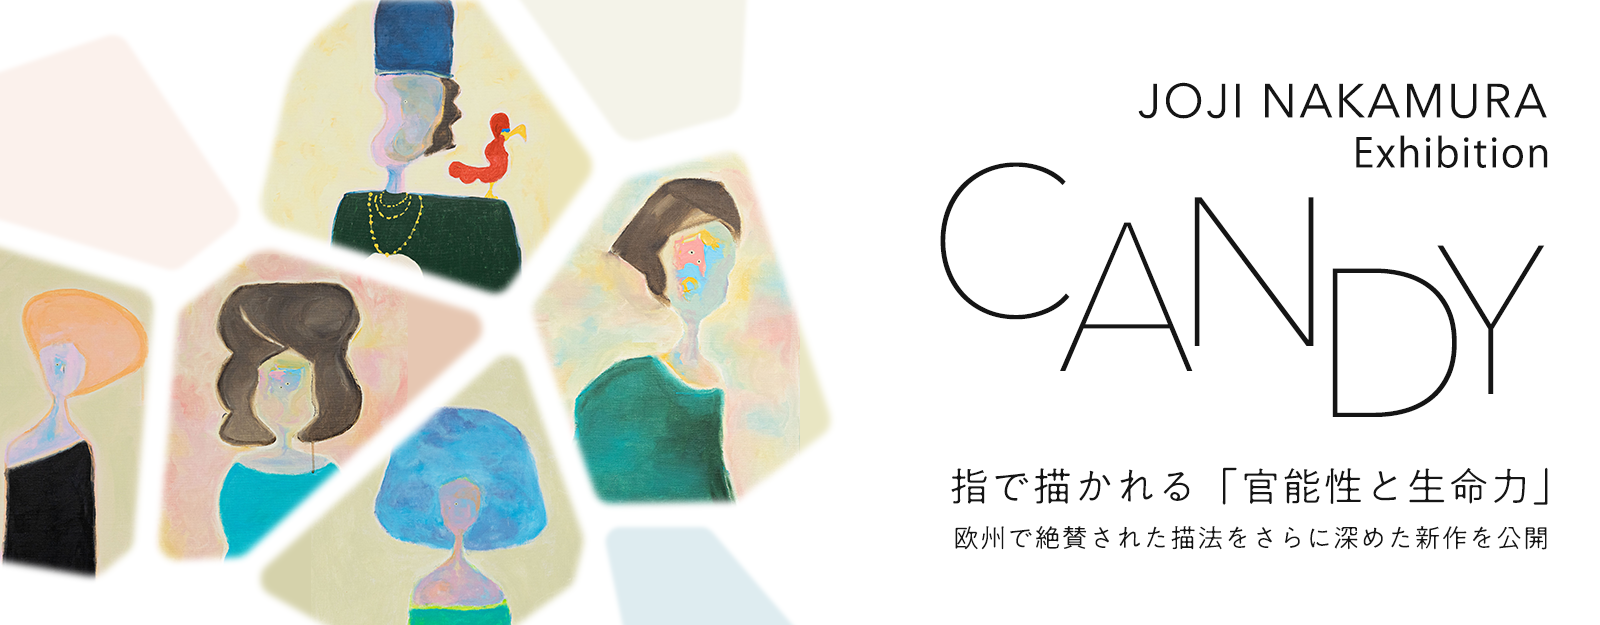 Joji Nakamura Solo Exhibition “CANDY” 